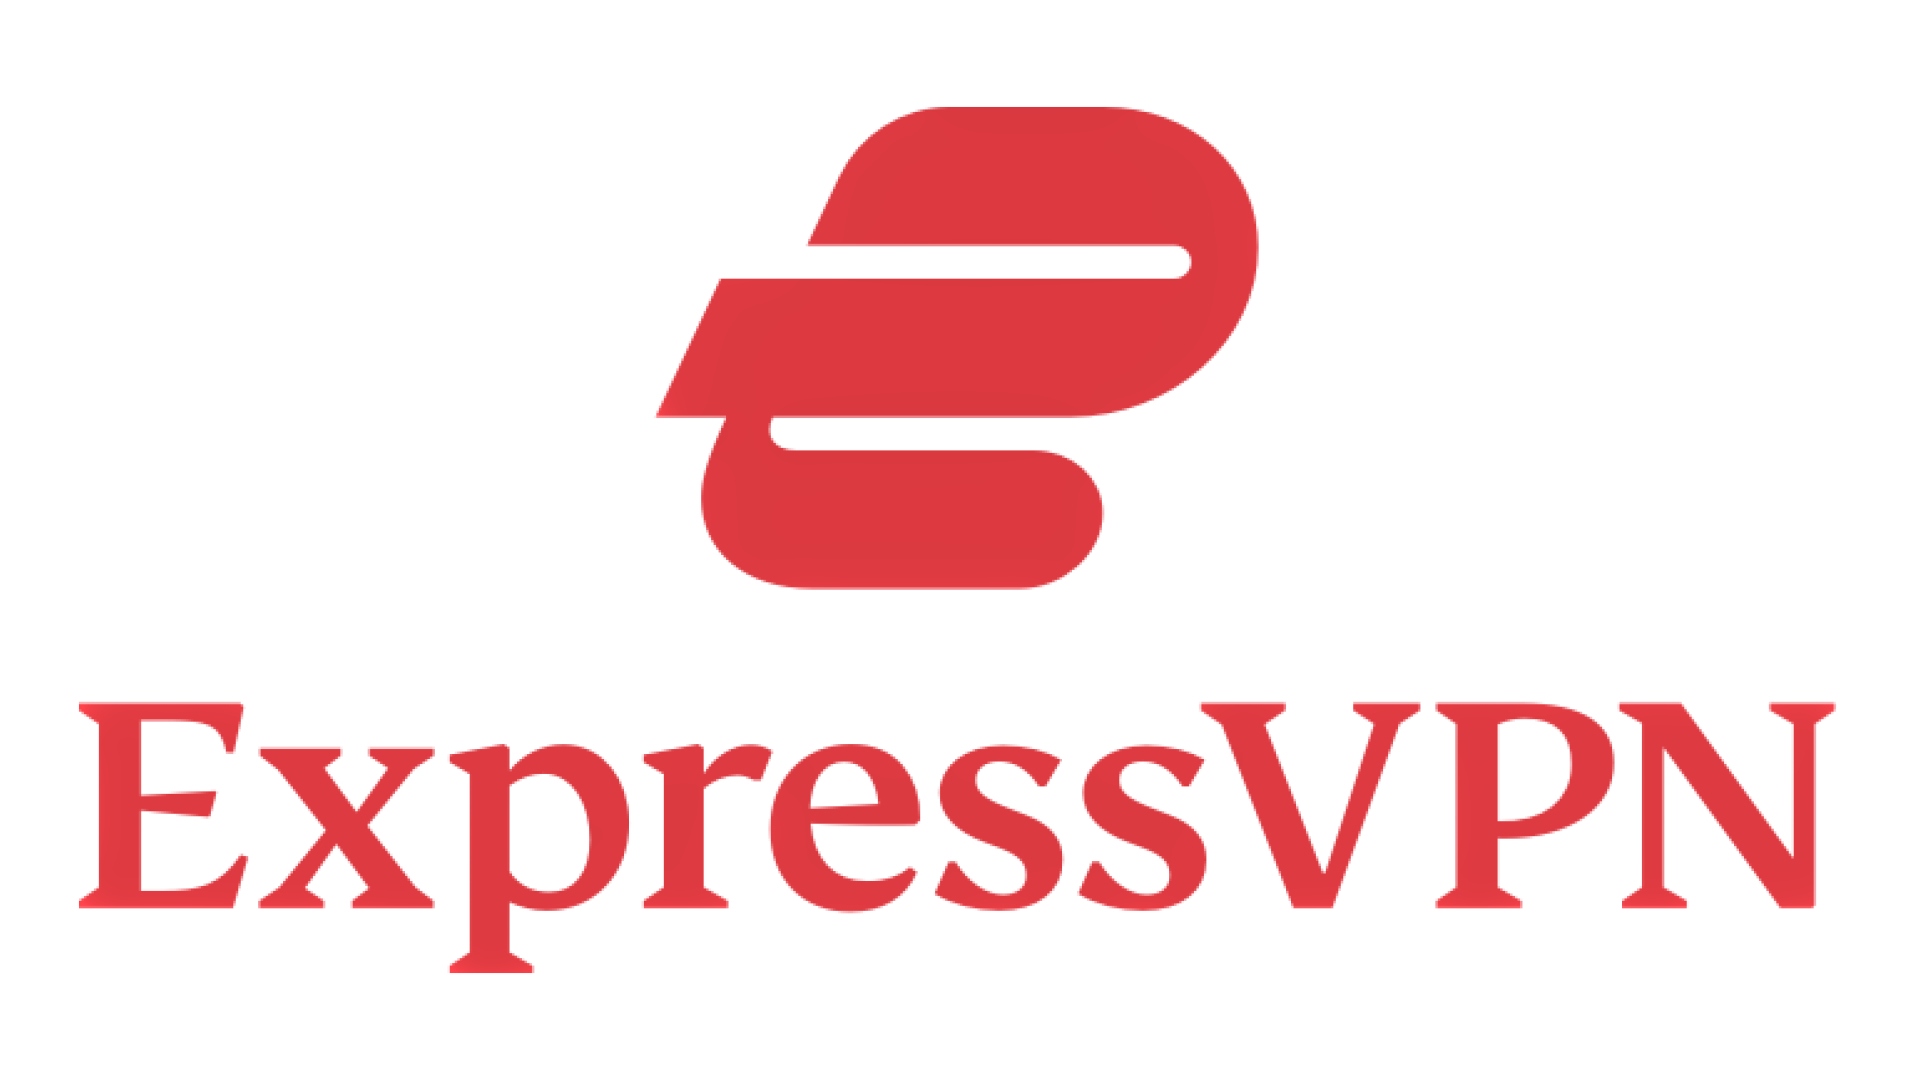 Best Firefox VPN: ExpressVPN. Image shows the company logo.